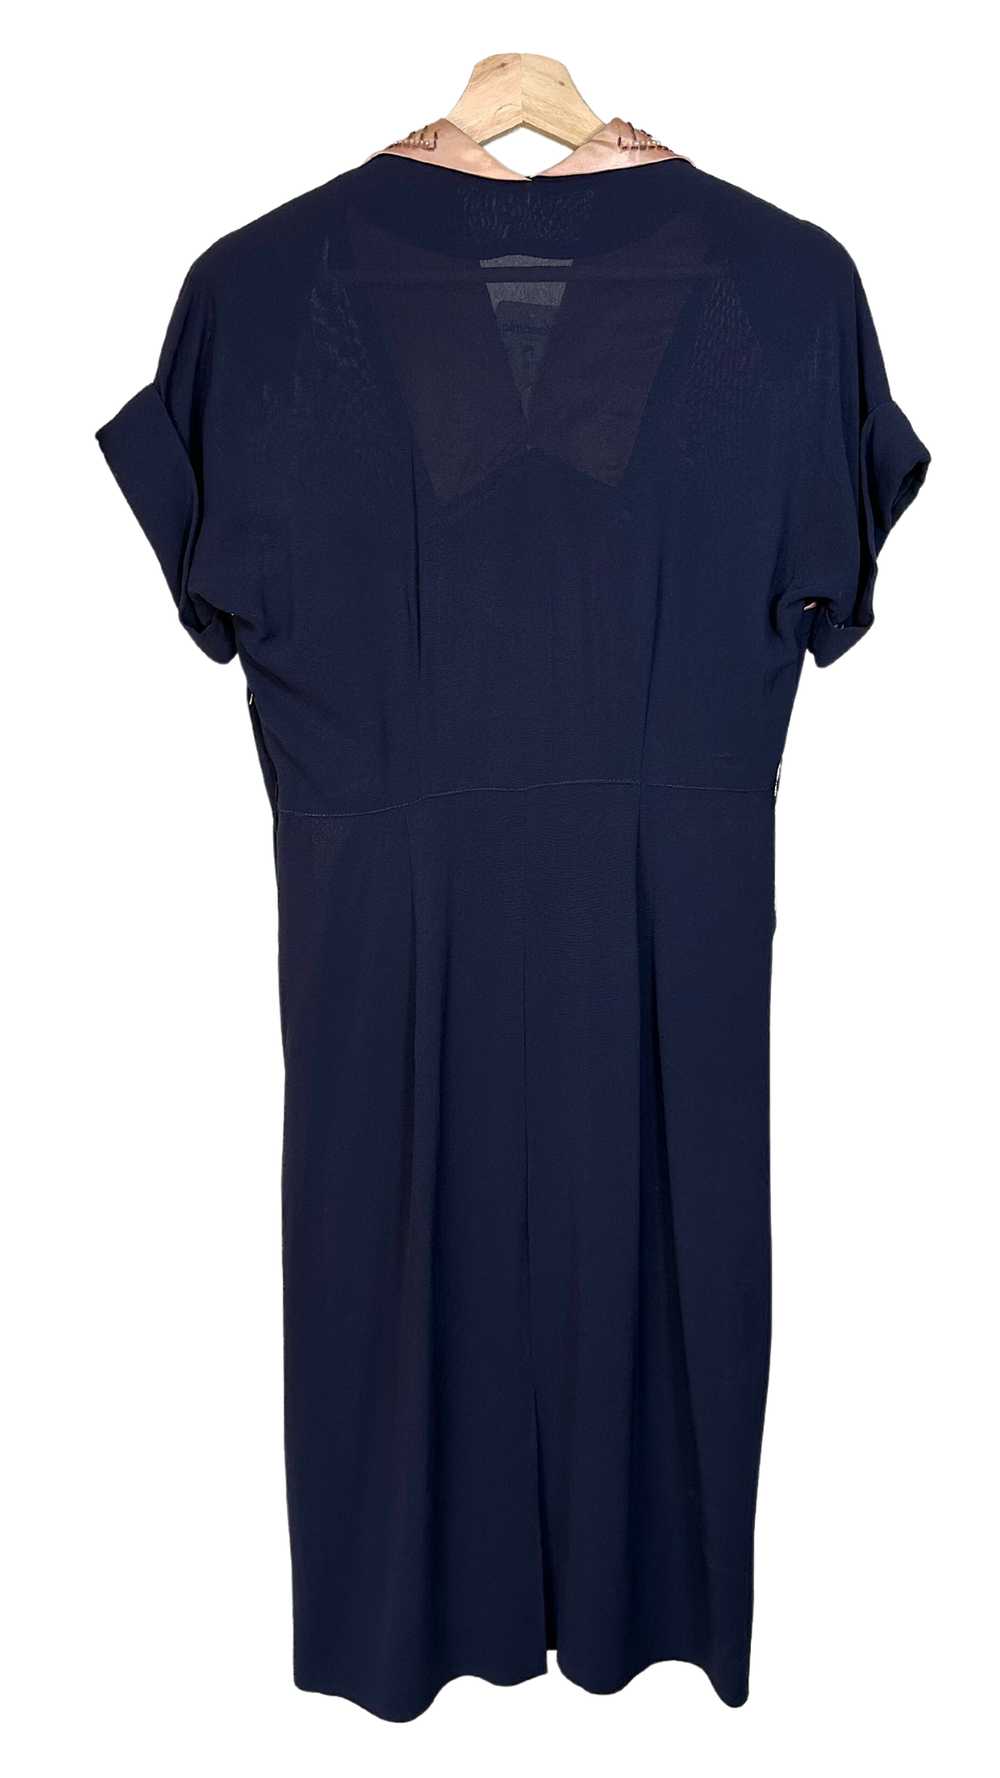 Vintage 1940s Navy Blue Dress with Pockets - M - image 2